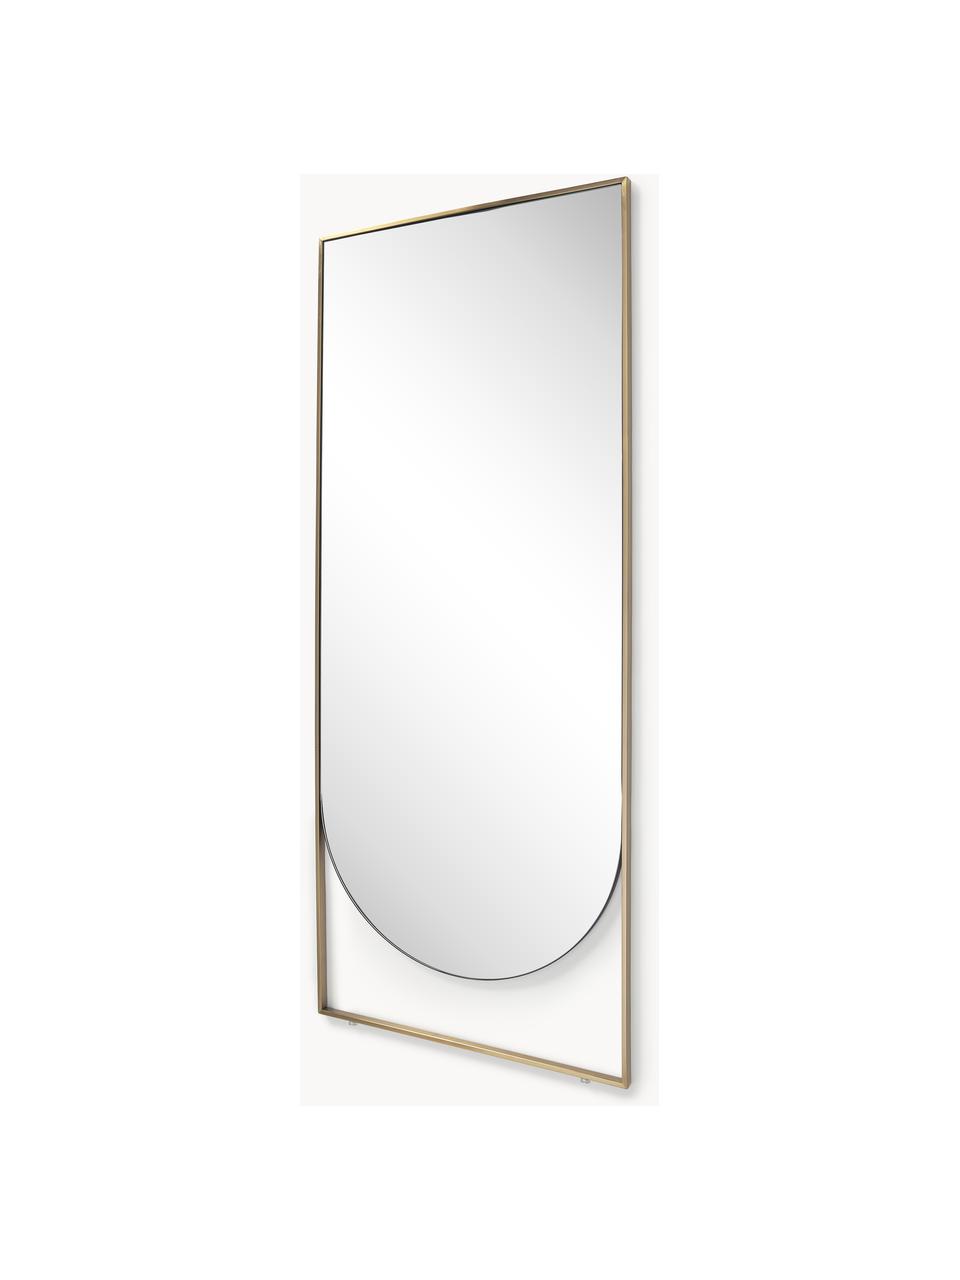 Naklápěcí zrcadlo Masha, Mosazná, Š 65 cm, V 160 cm